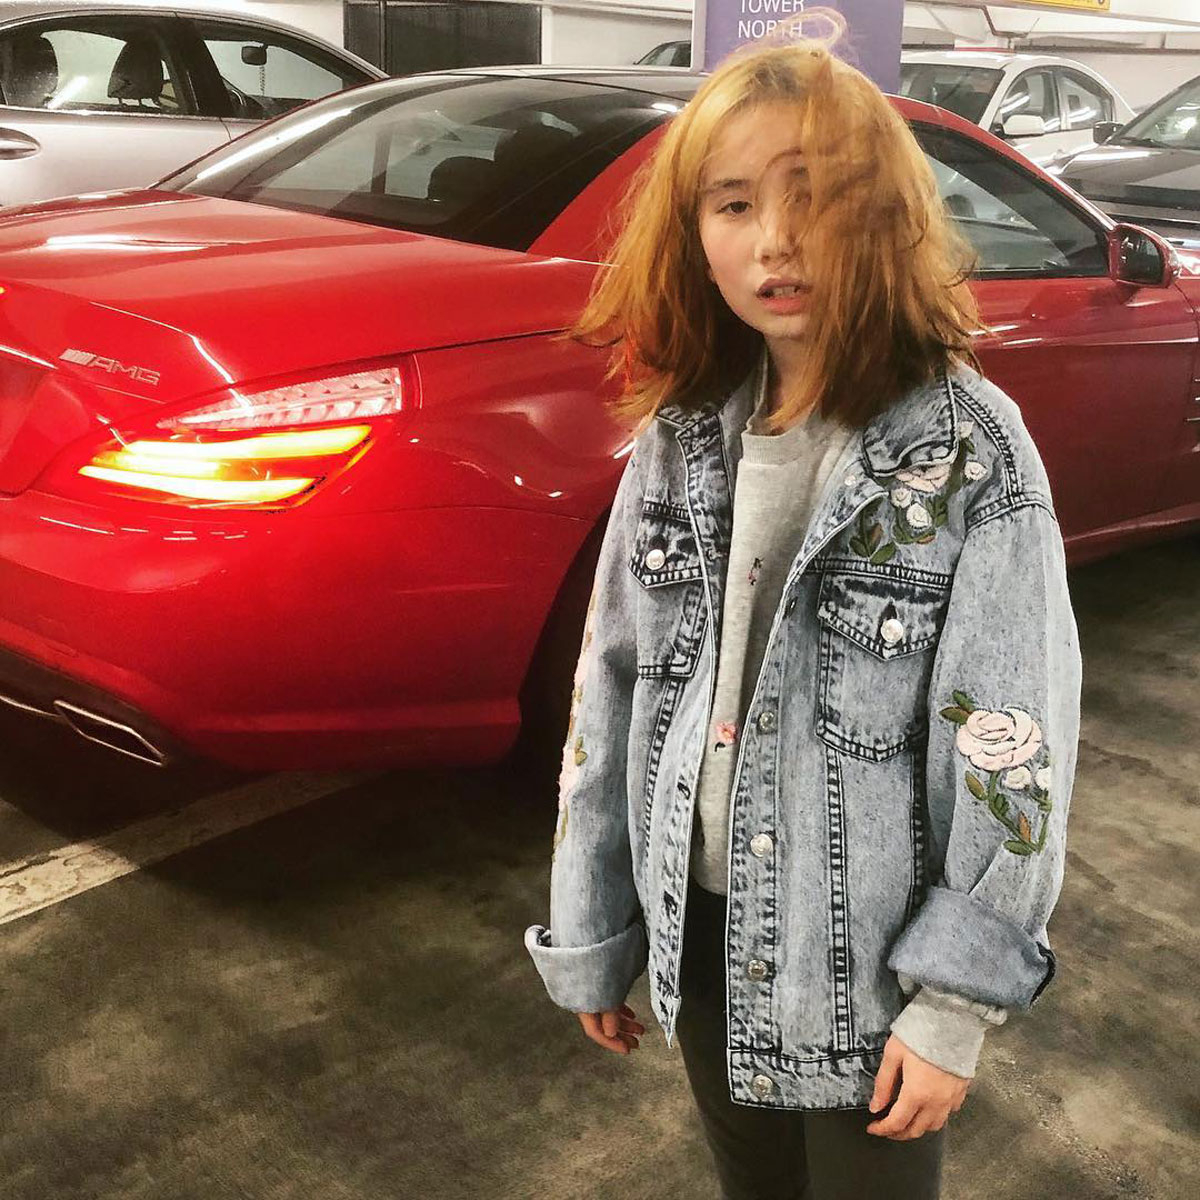 Lil Tay’s Mom Angela Tian Details Custody Battle Following Death Hoax